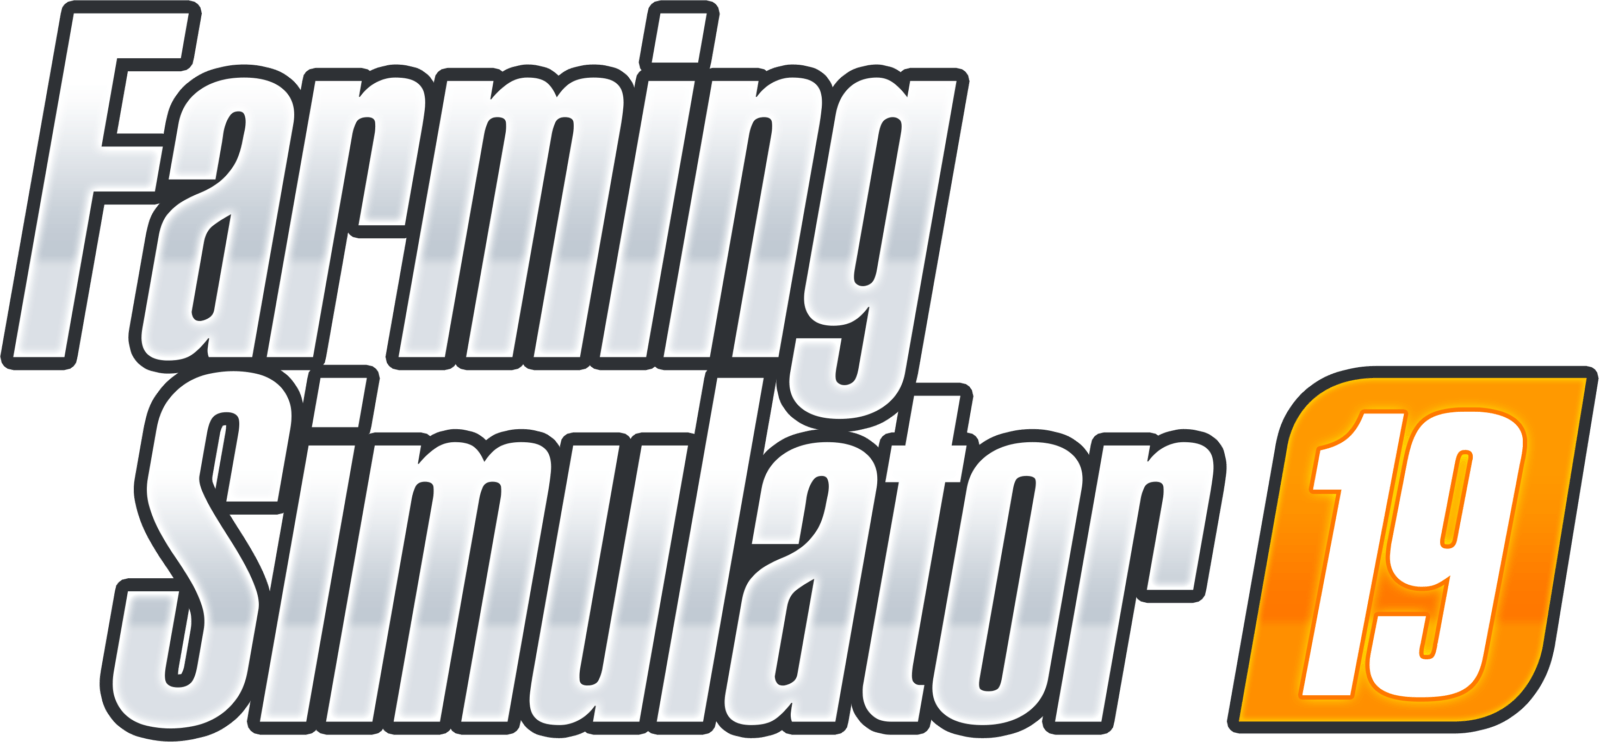 Farming Simulator 19 Cheats Mgw Game Cheats Cheat Codes Guides